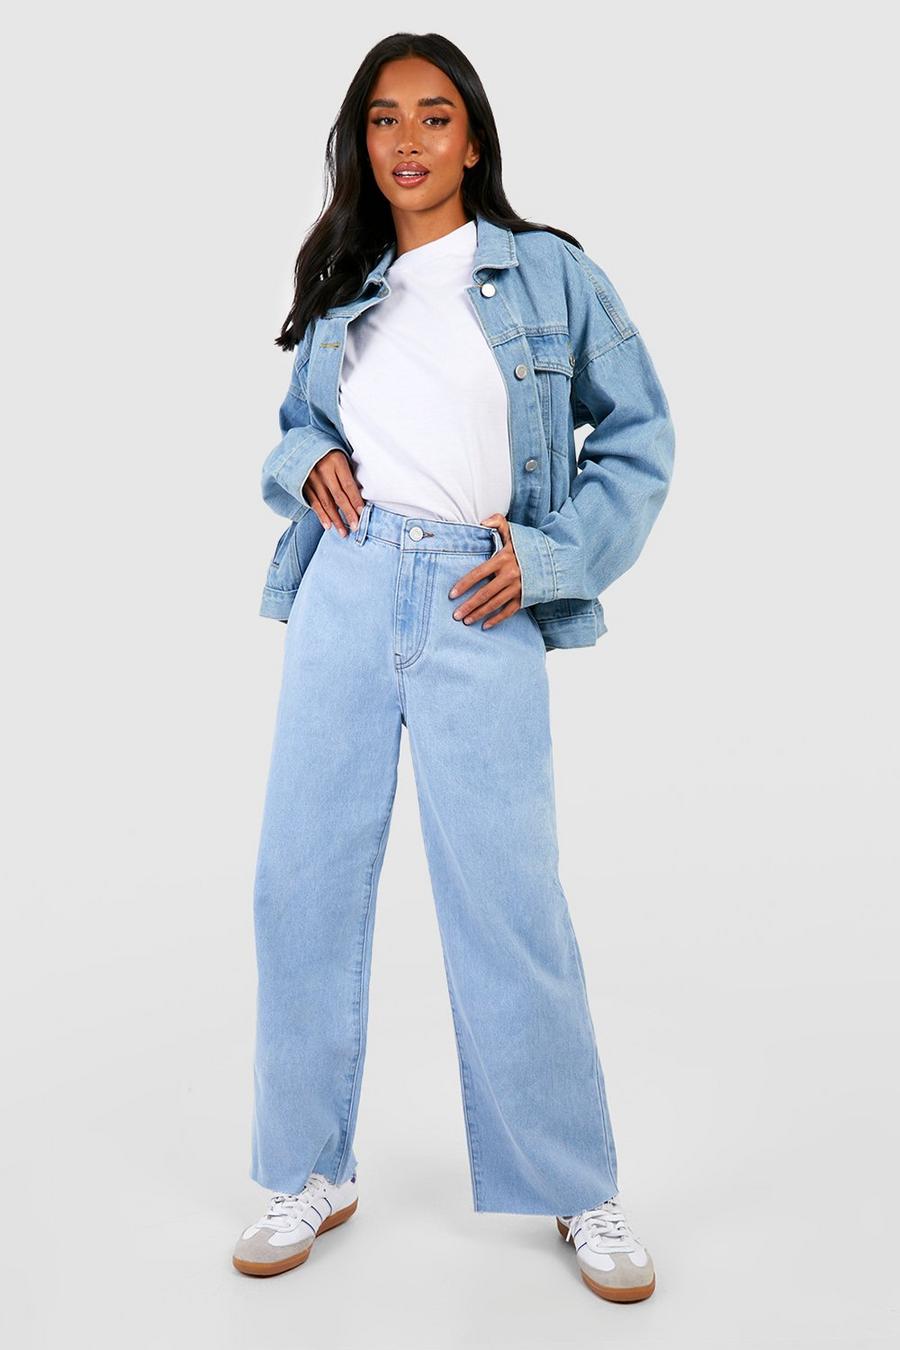 Petite Jeans | Shop Petite Skinny Jeans for Women | boohoo NZ